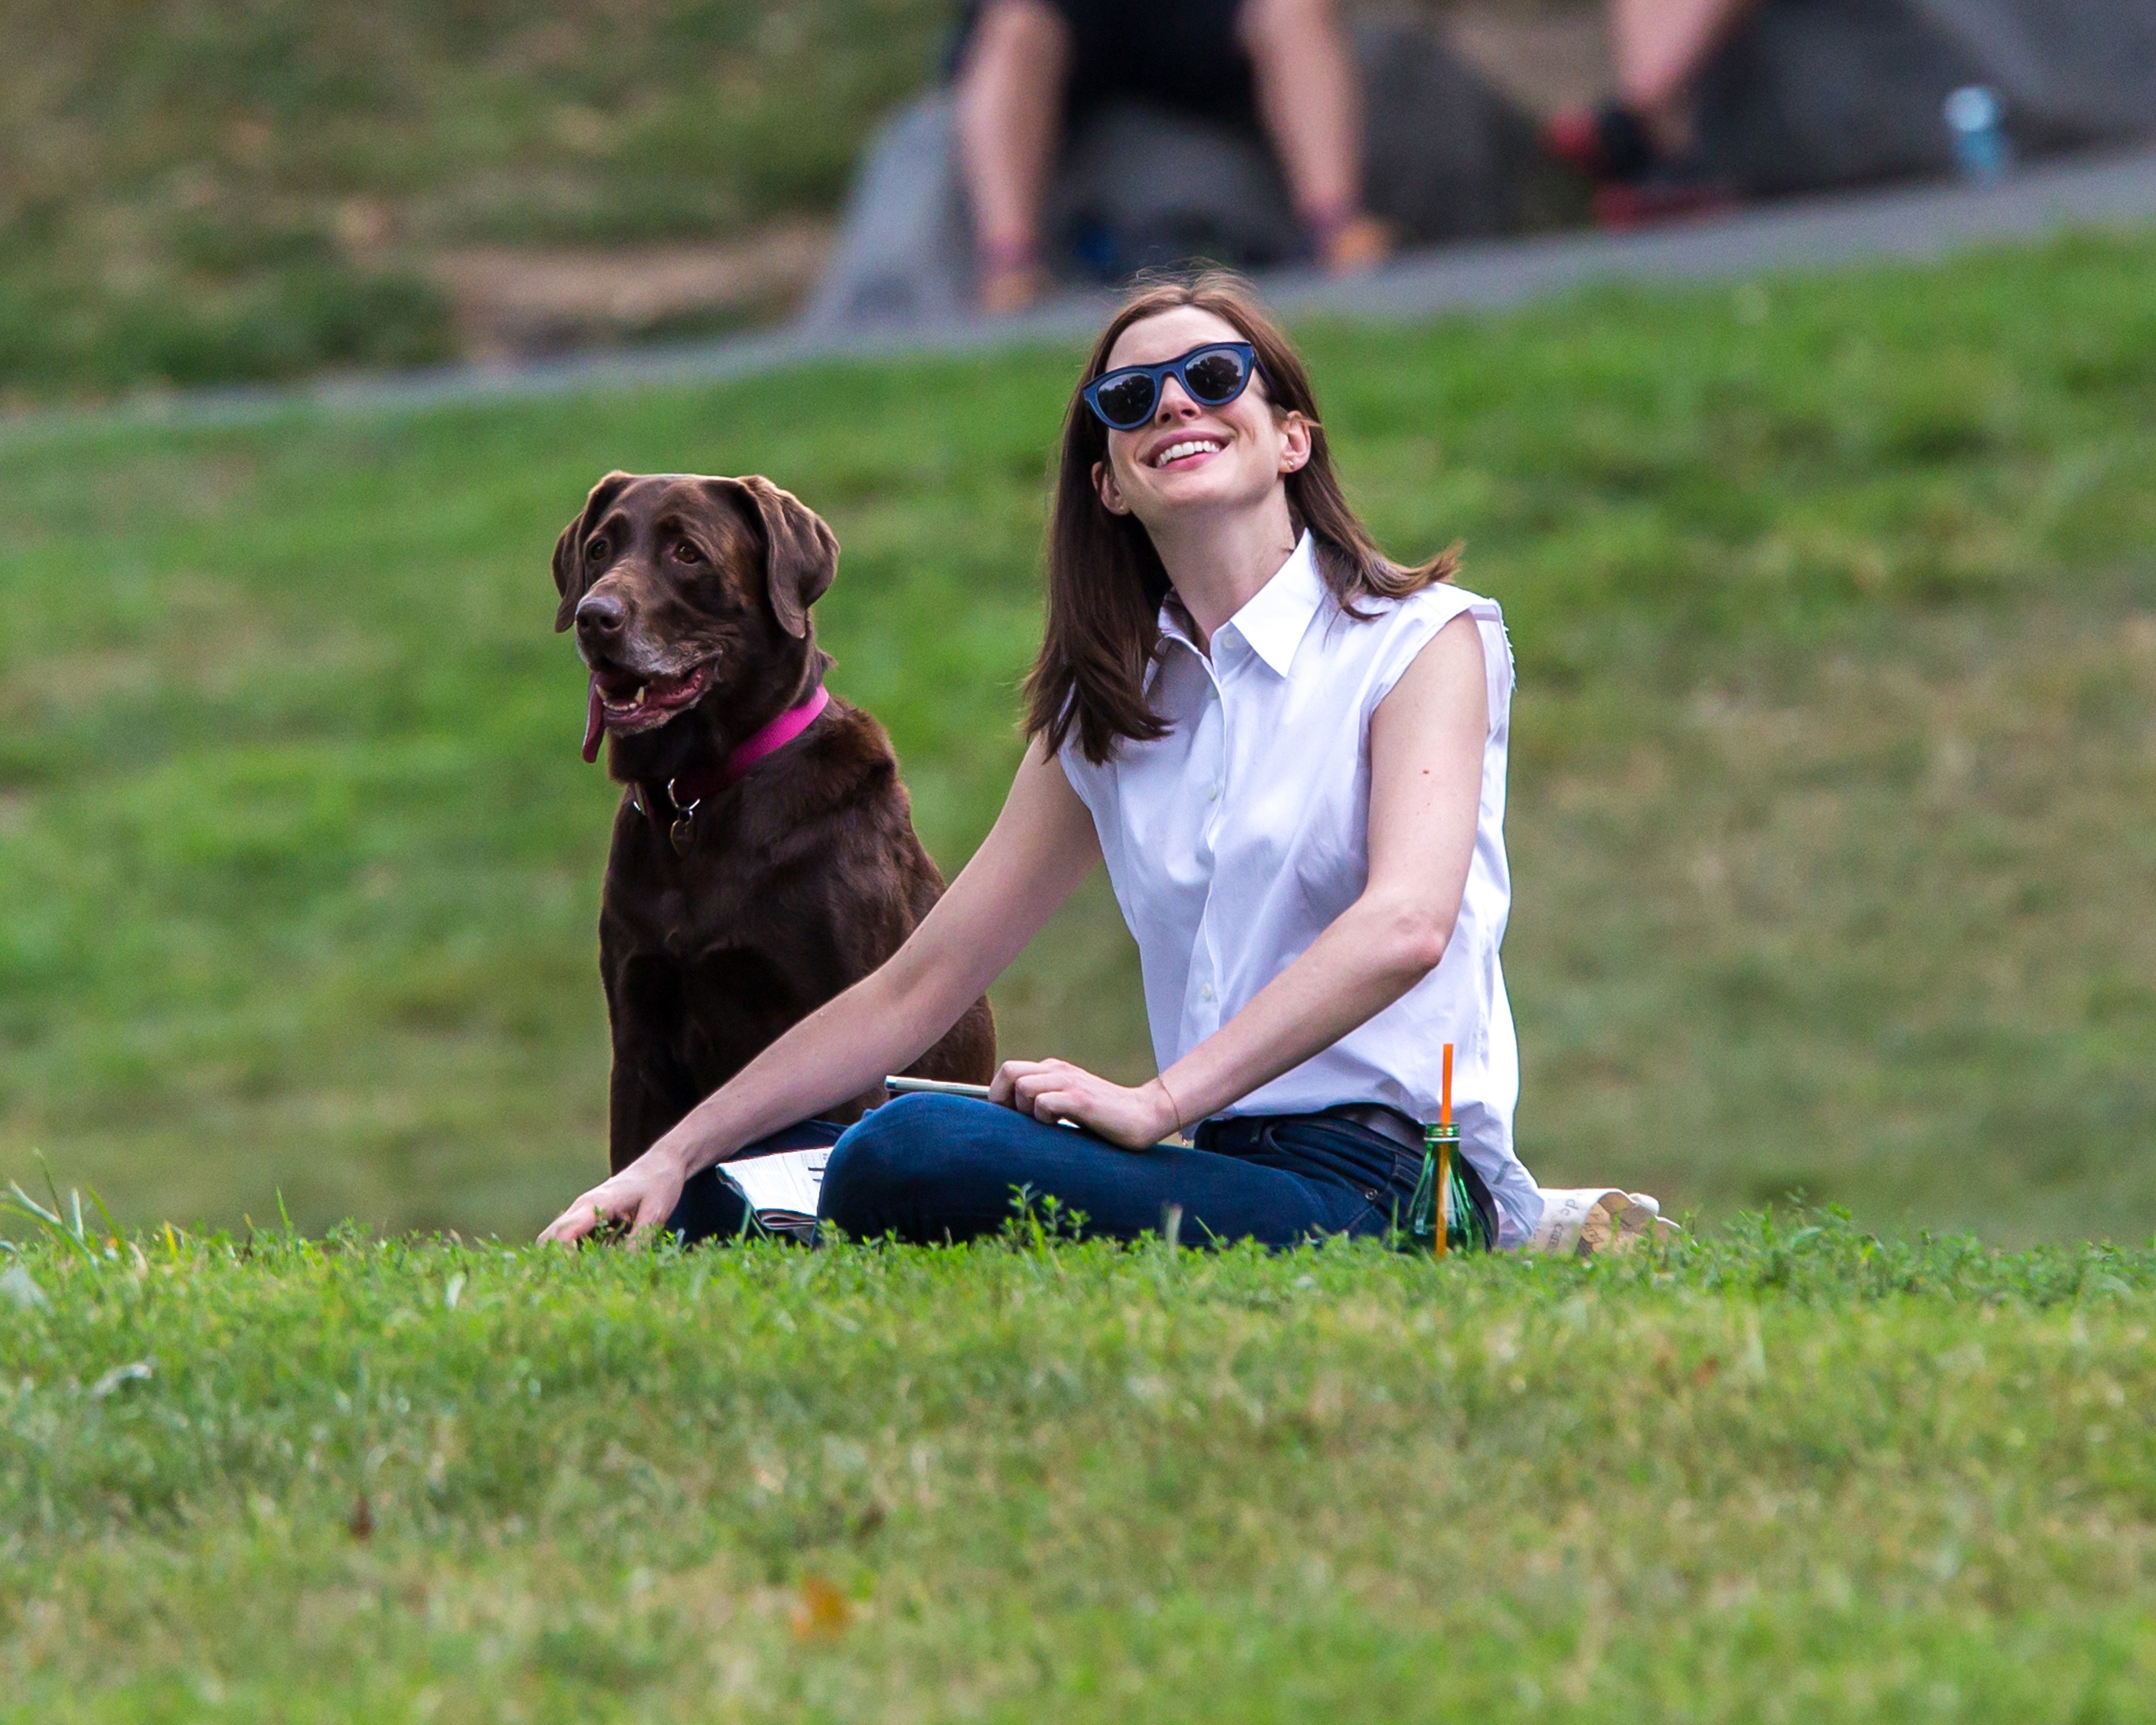 Anne Hathaway And Her Pup, Esmeralda